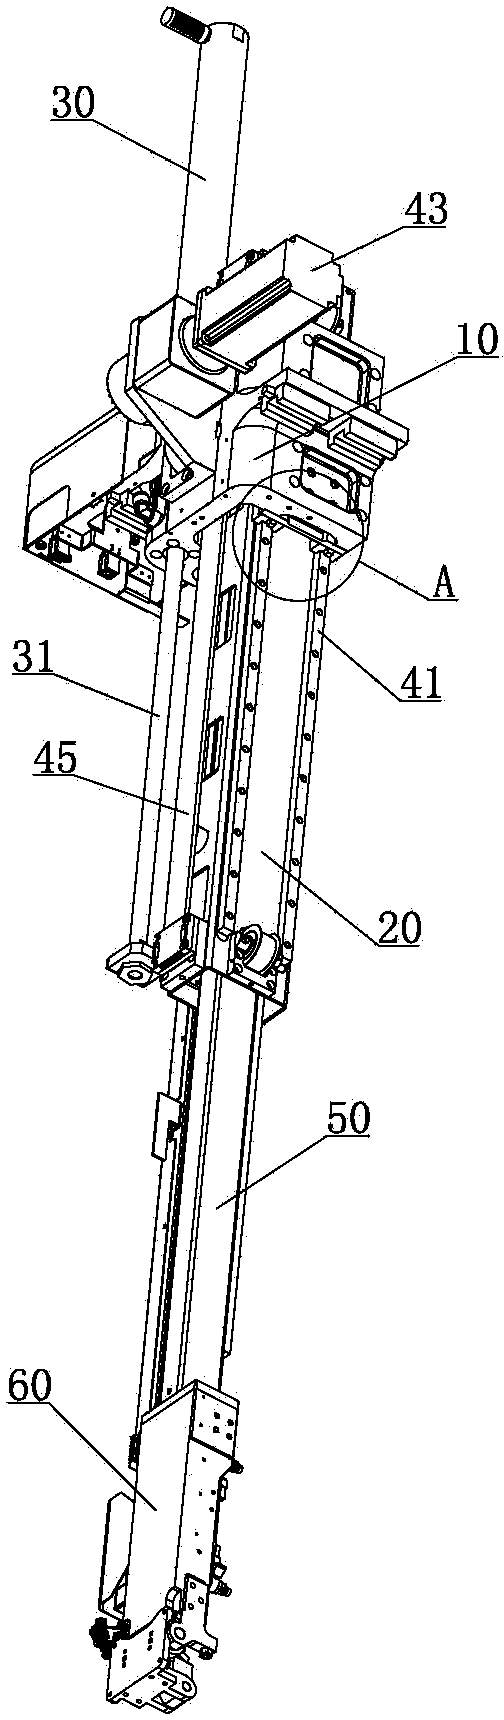 Mechanical hand with balance cylinder